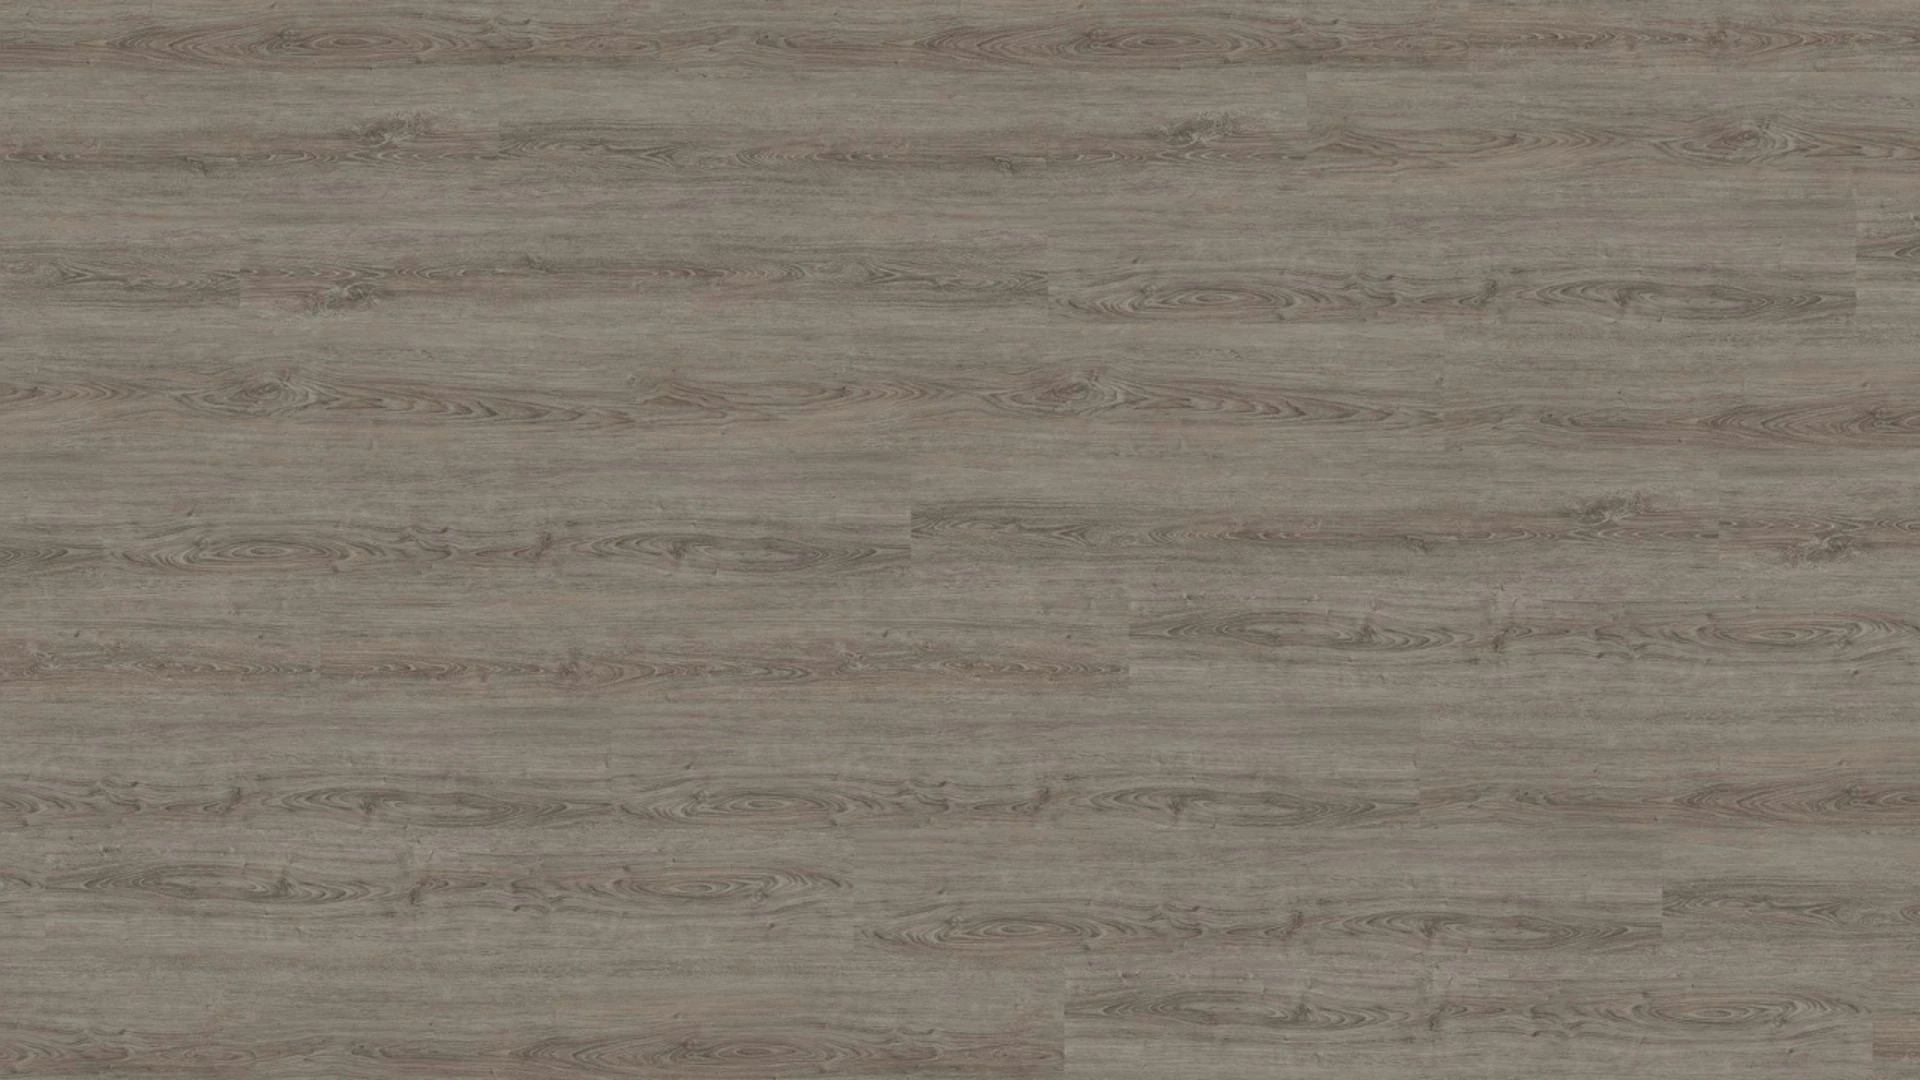 Wineo Sol PVC clipsable - 800 wood XL Ponza Smoky Oak (DLC00067)